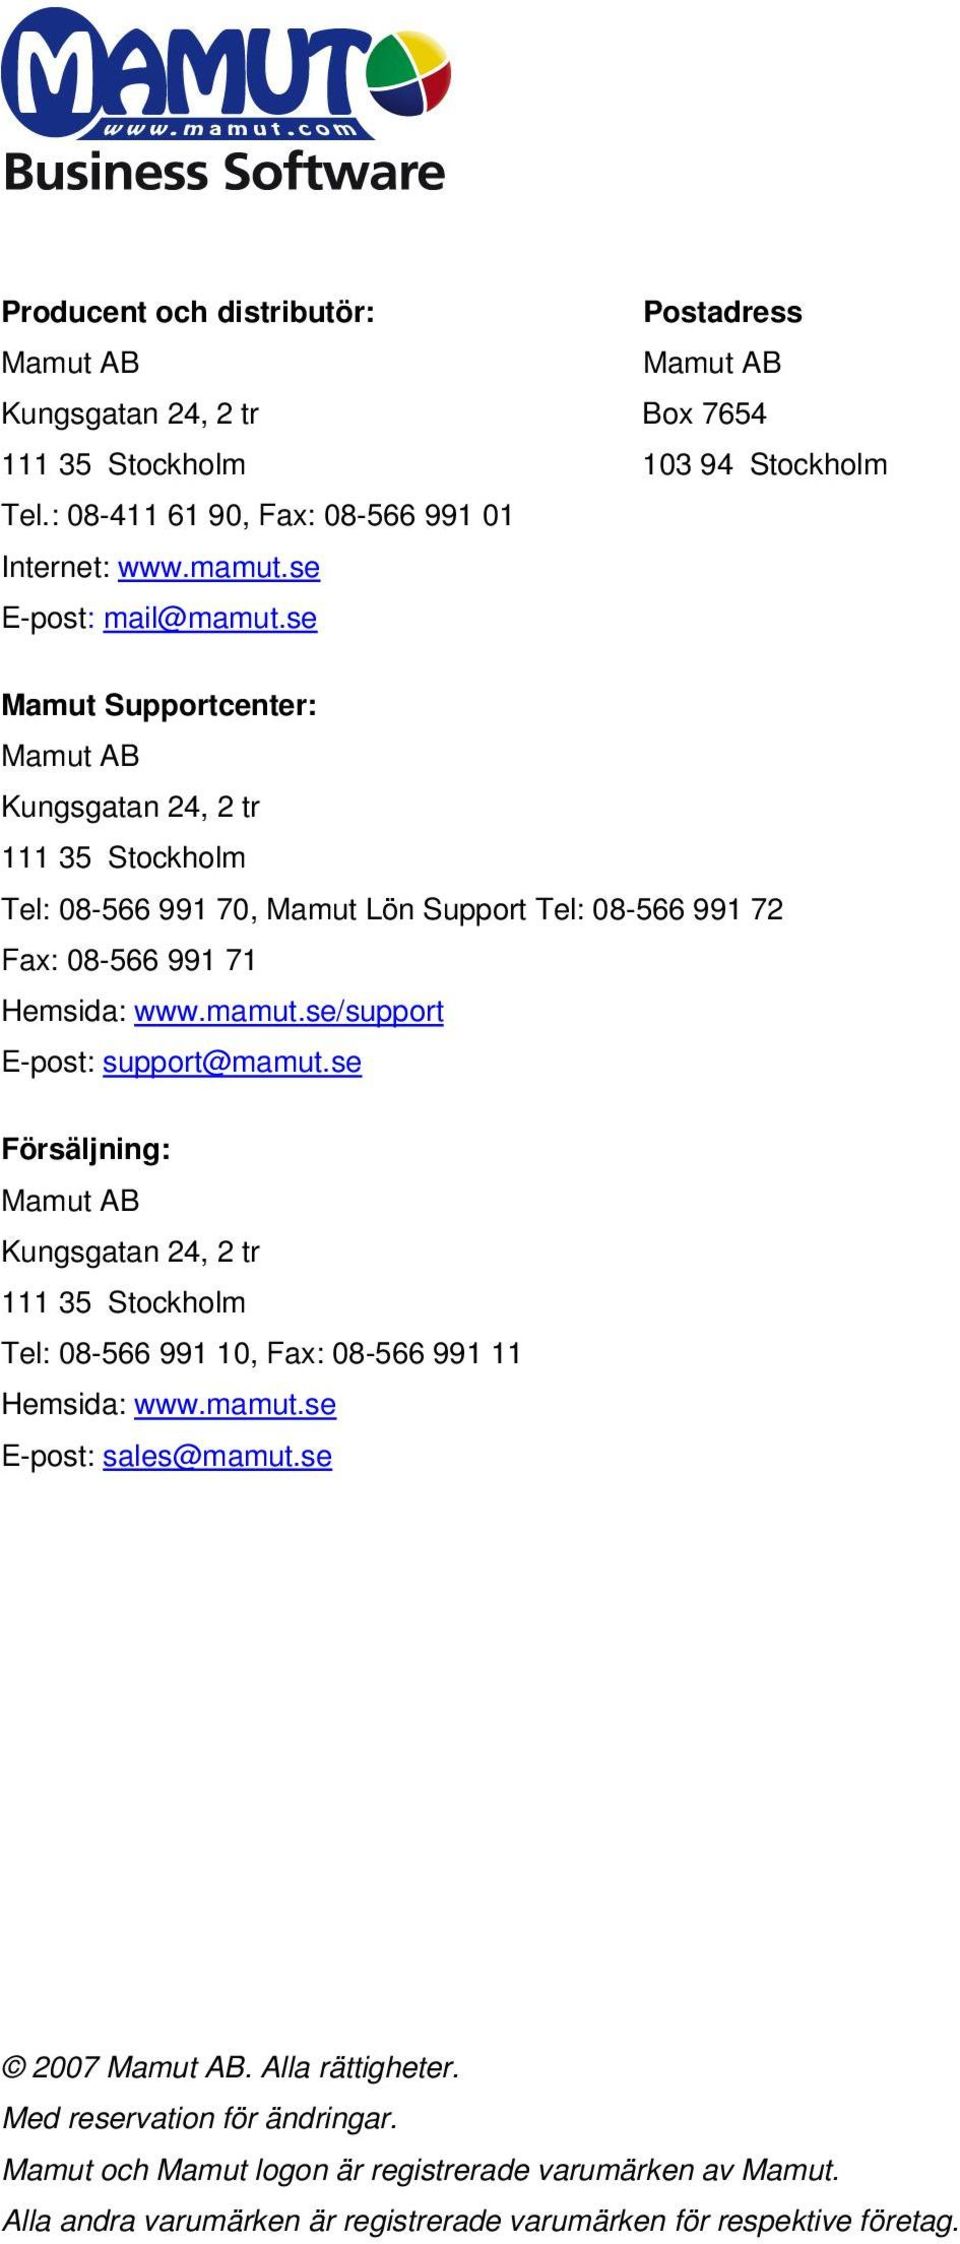 mamut.se/support E-post: support@mamut.se Försäljning: Mamut AB Kungsgatan 24, 2 tr 111 35 Stockholm Tel: 08-566 991 10, Fax: 08-566 991 11 Hemsida: www.mamut.se E-post: sales@mamut.